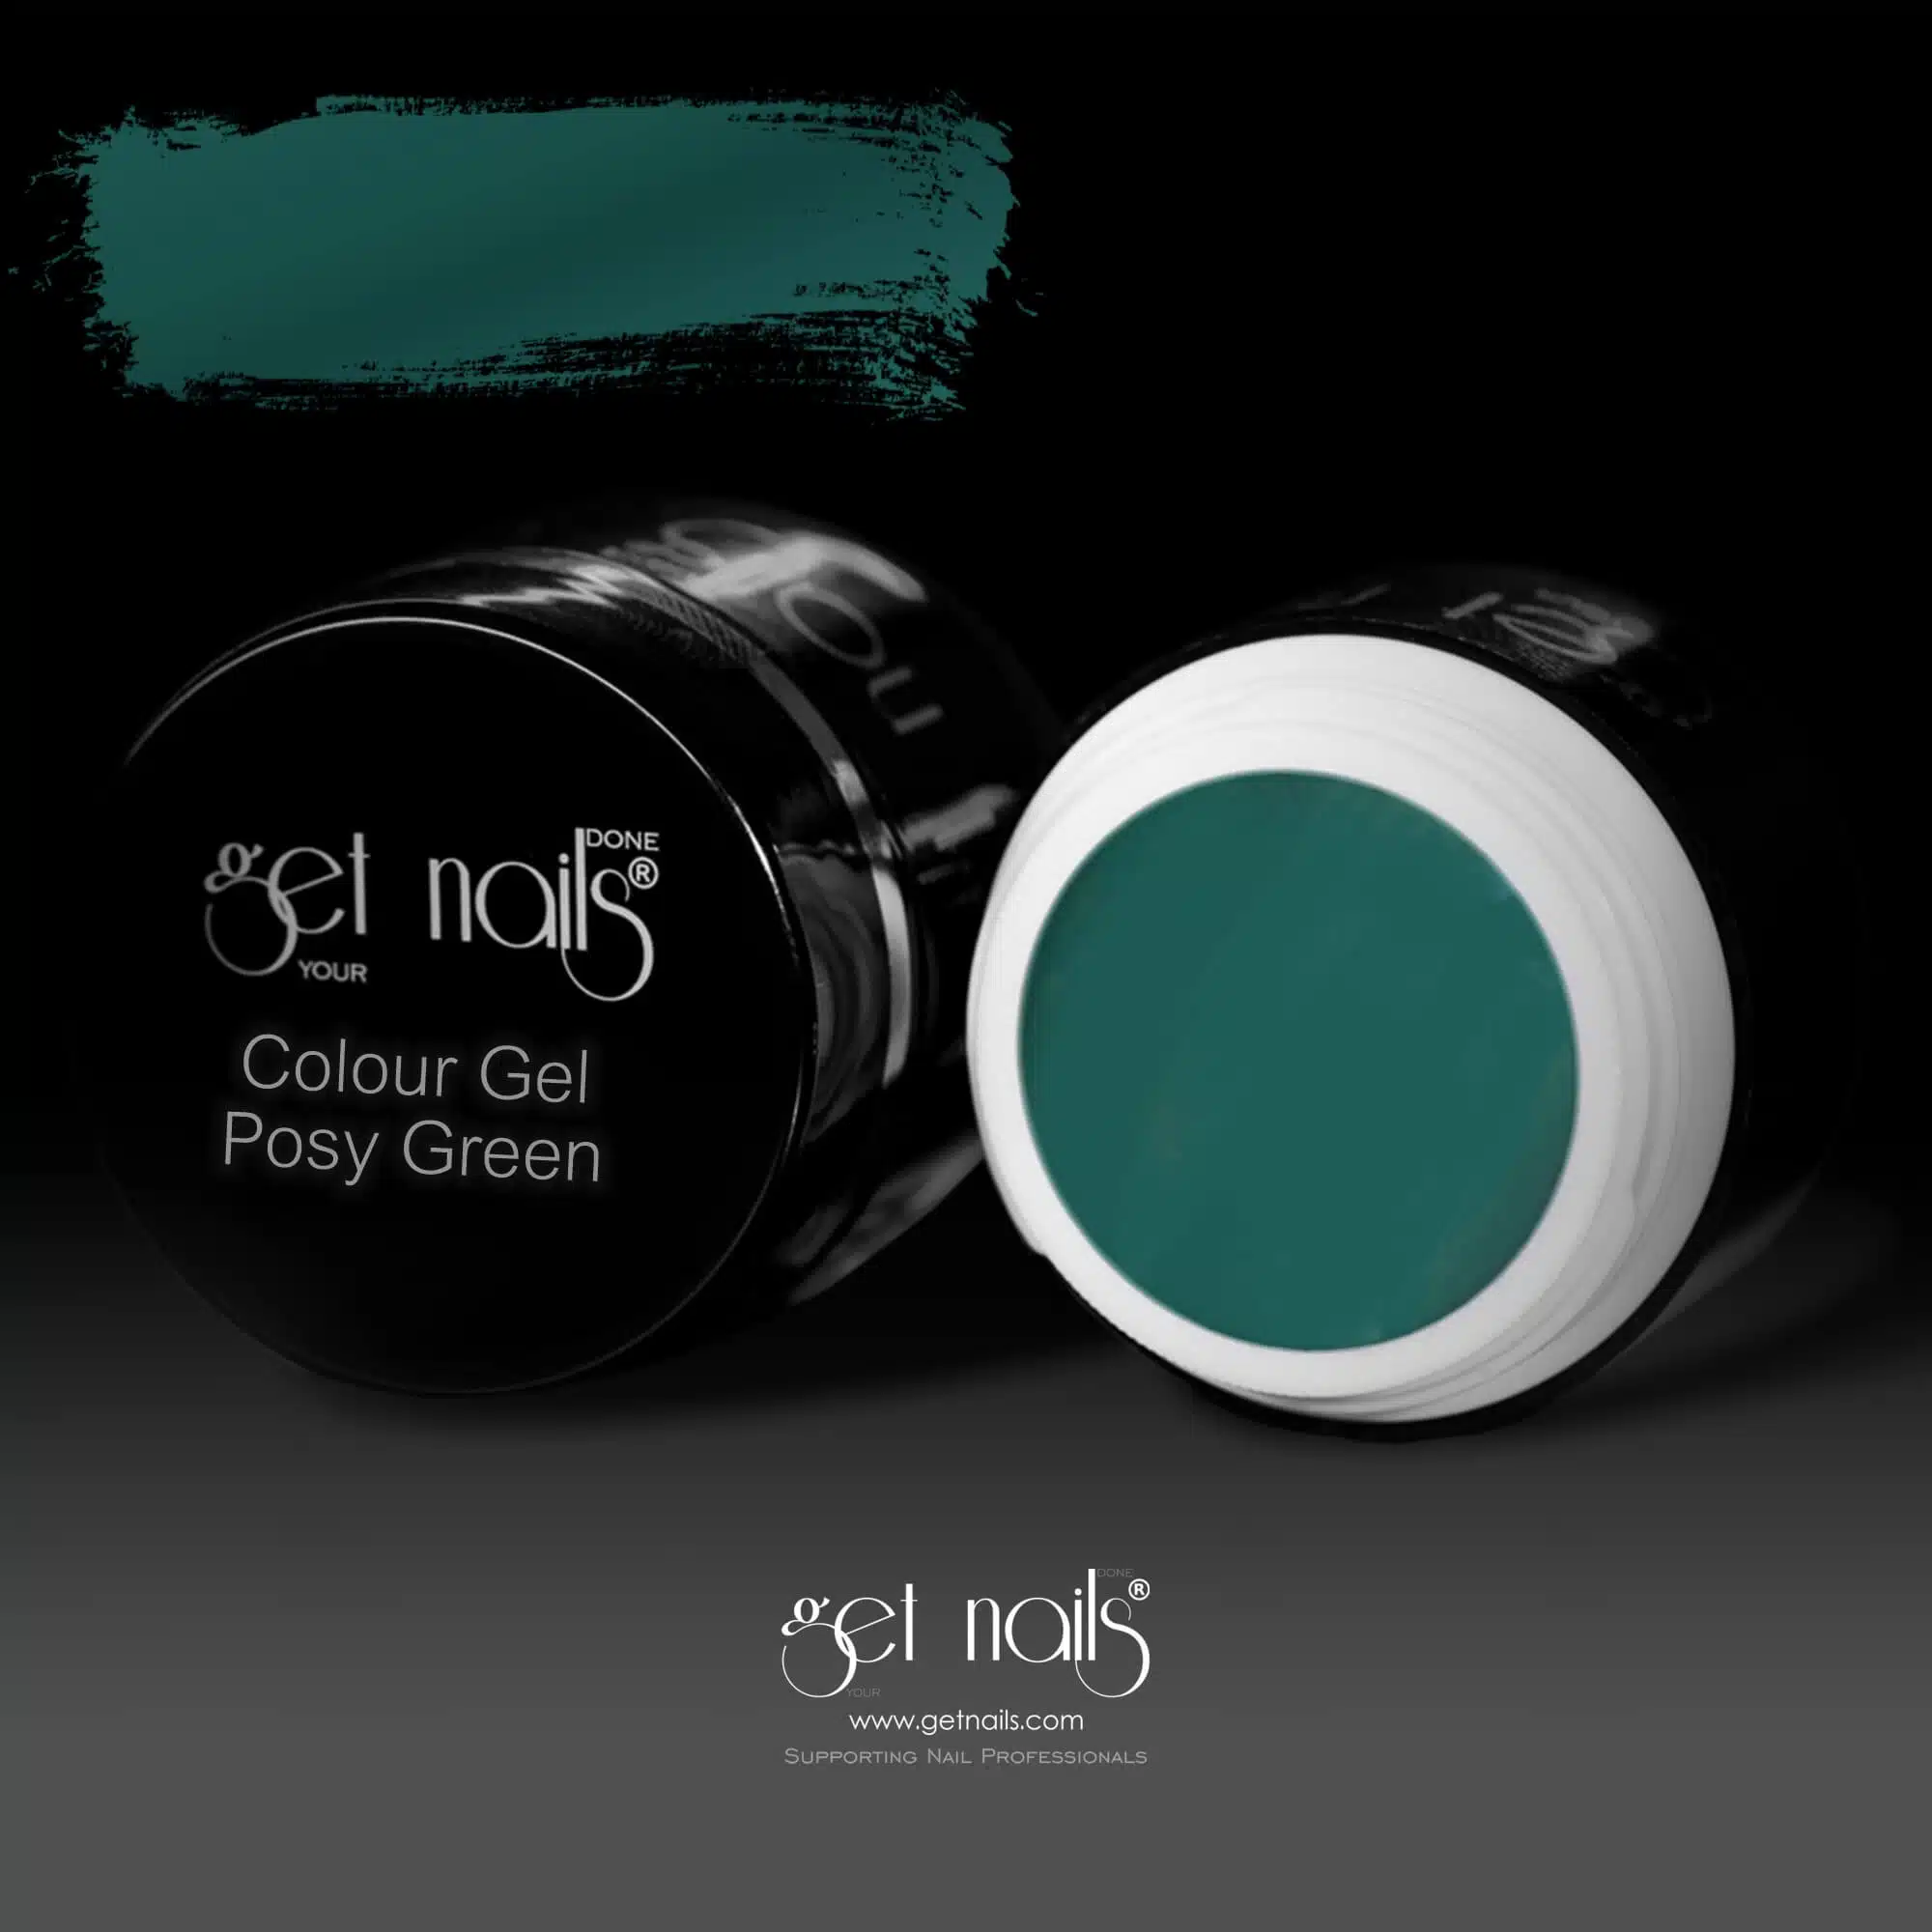 Get Nails Austria - Gel colorato Posy Green 5g